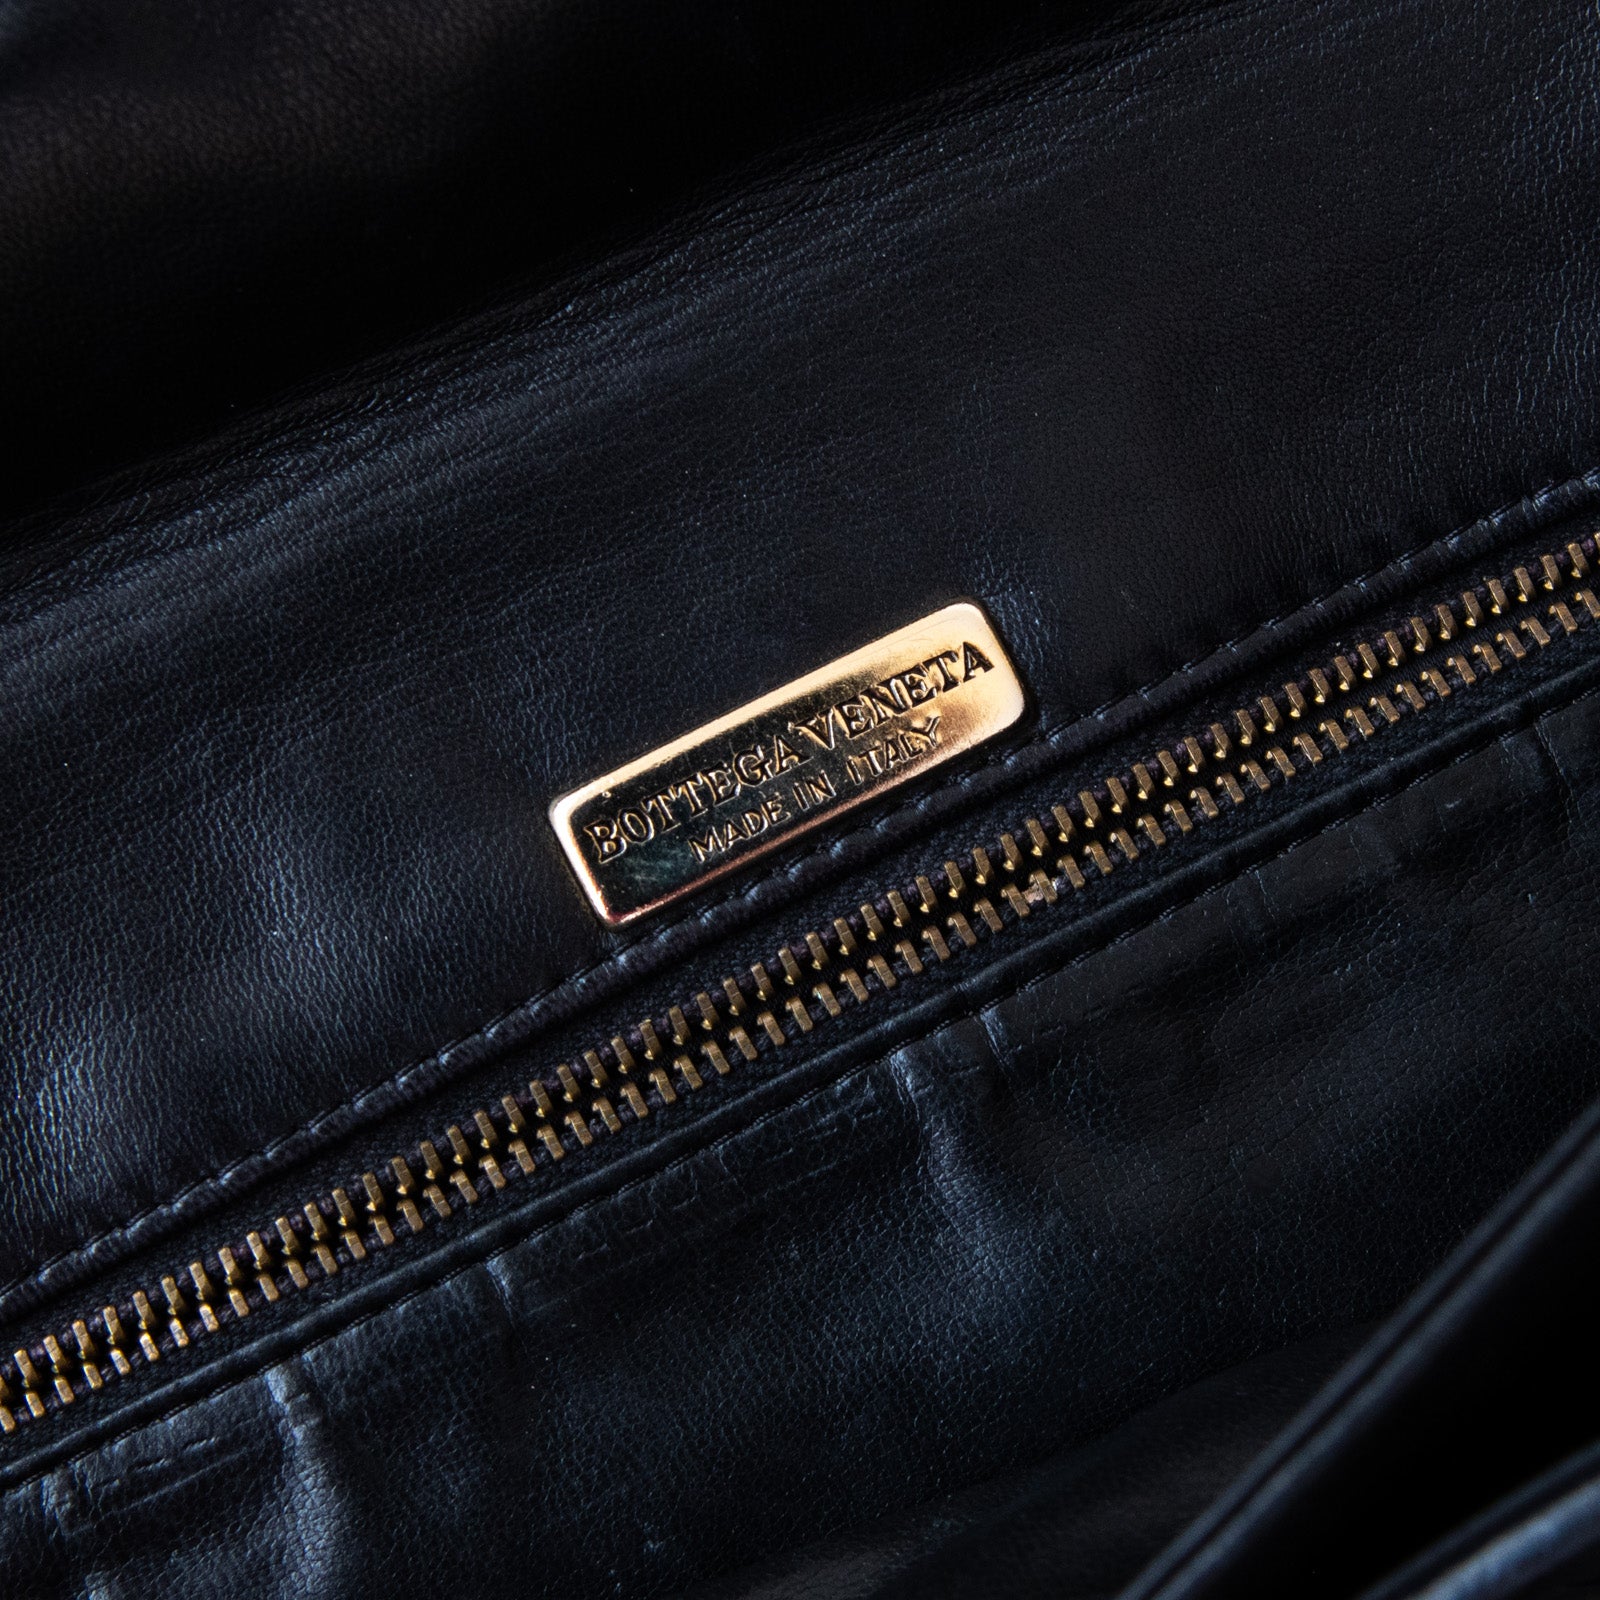 Bottega Veneta Black Leather Clutch Bag - Image 4 of 6